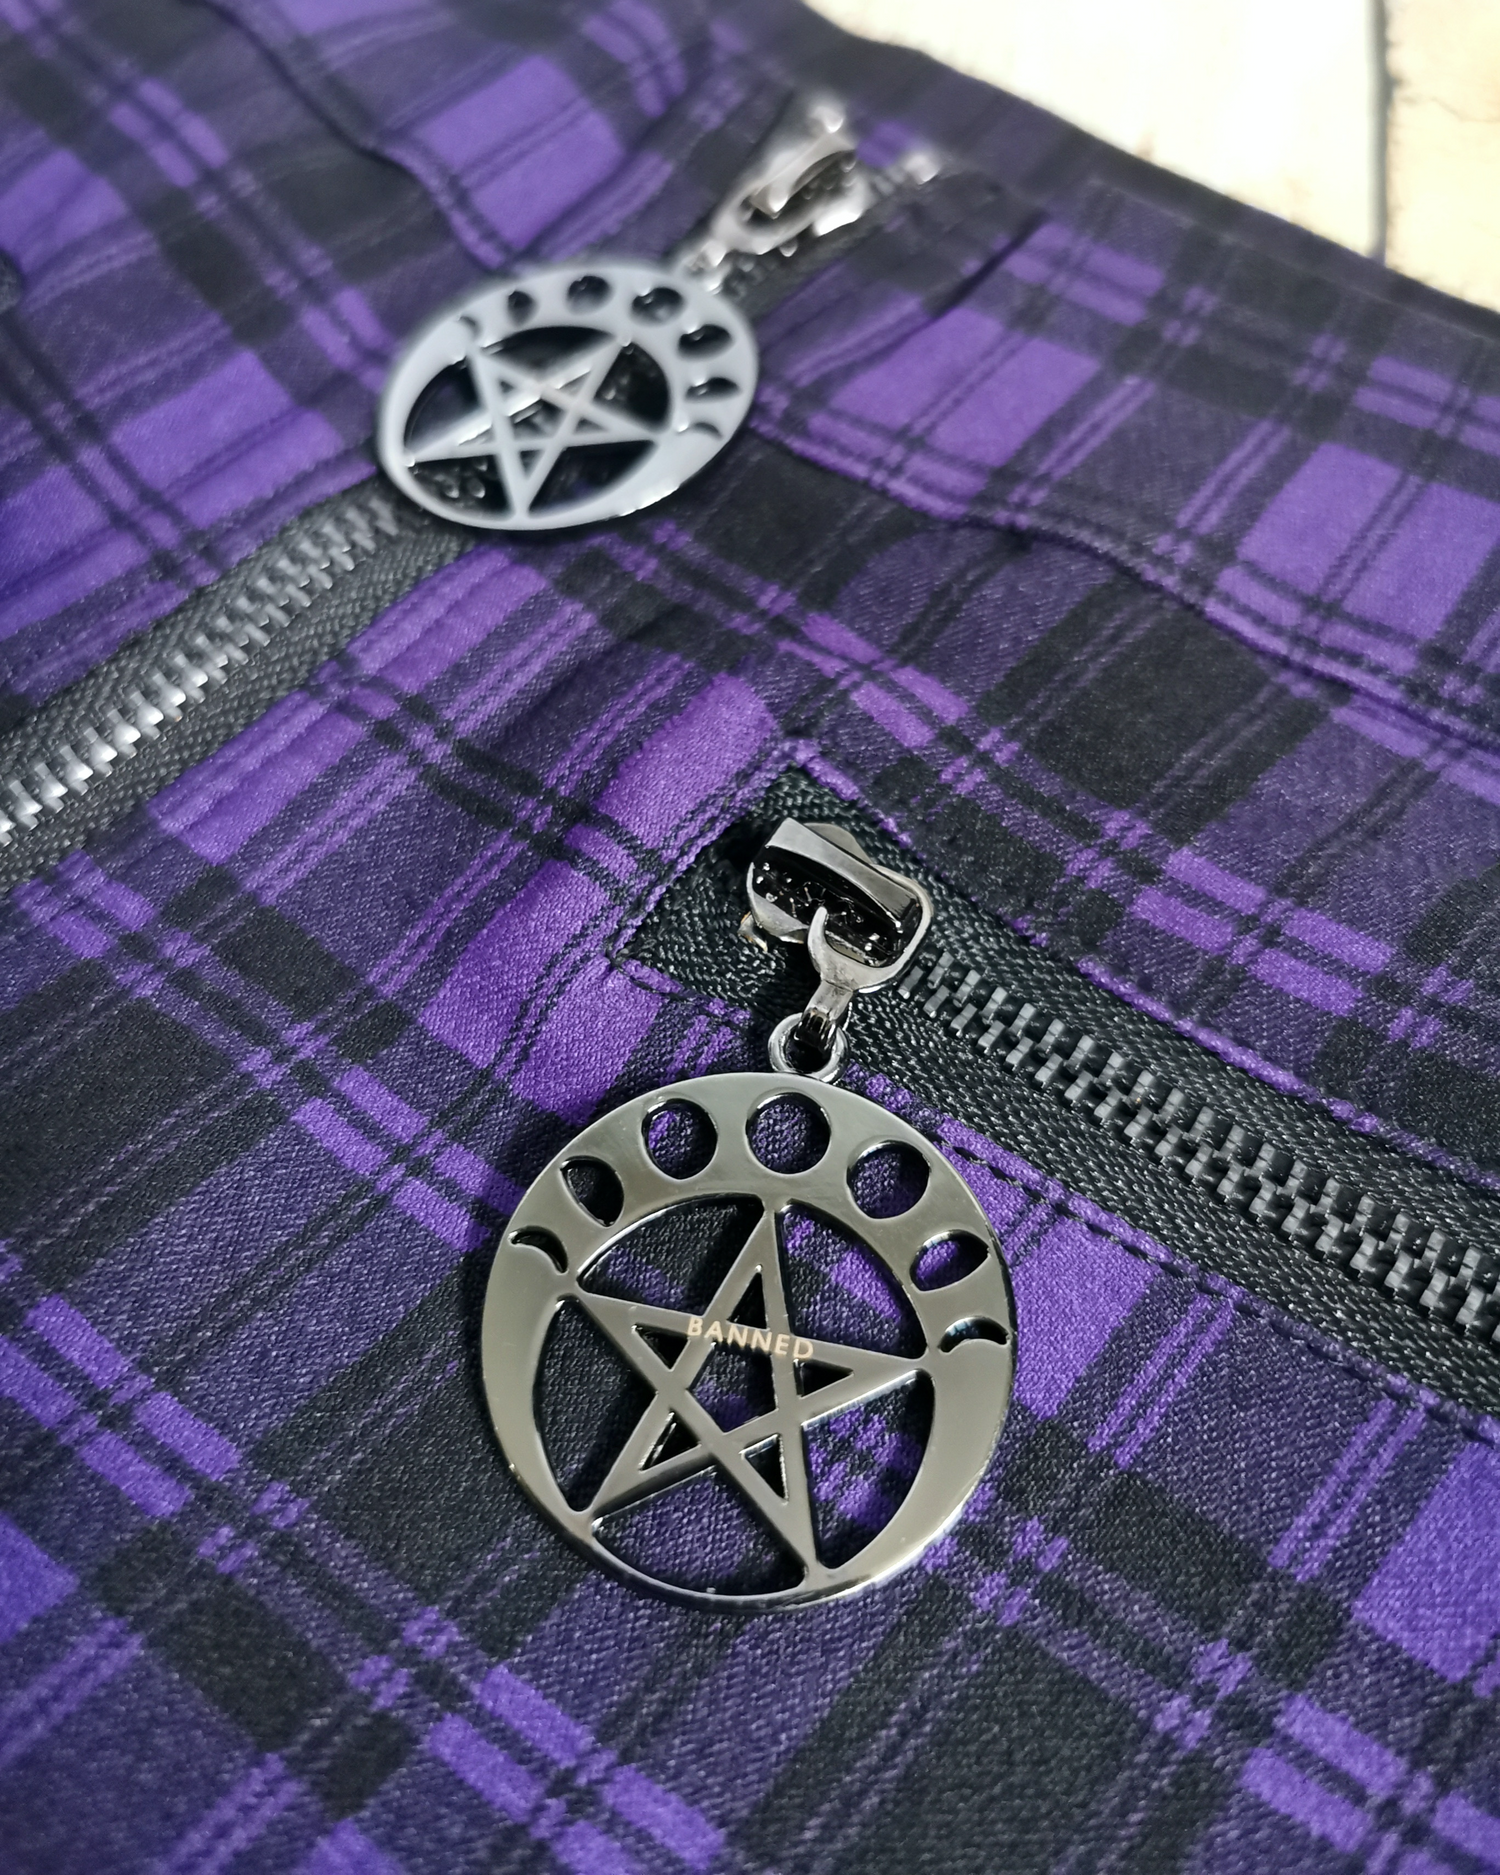 Detail shot of purple tartan trousers showing pentagram pendant 